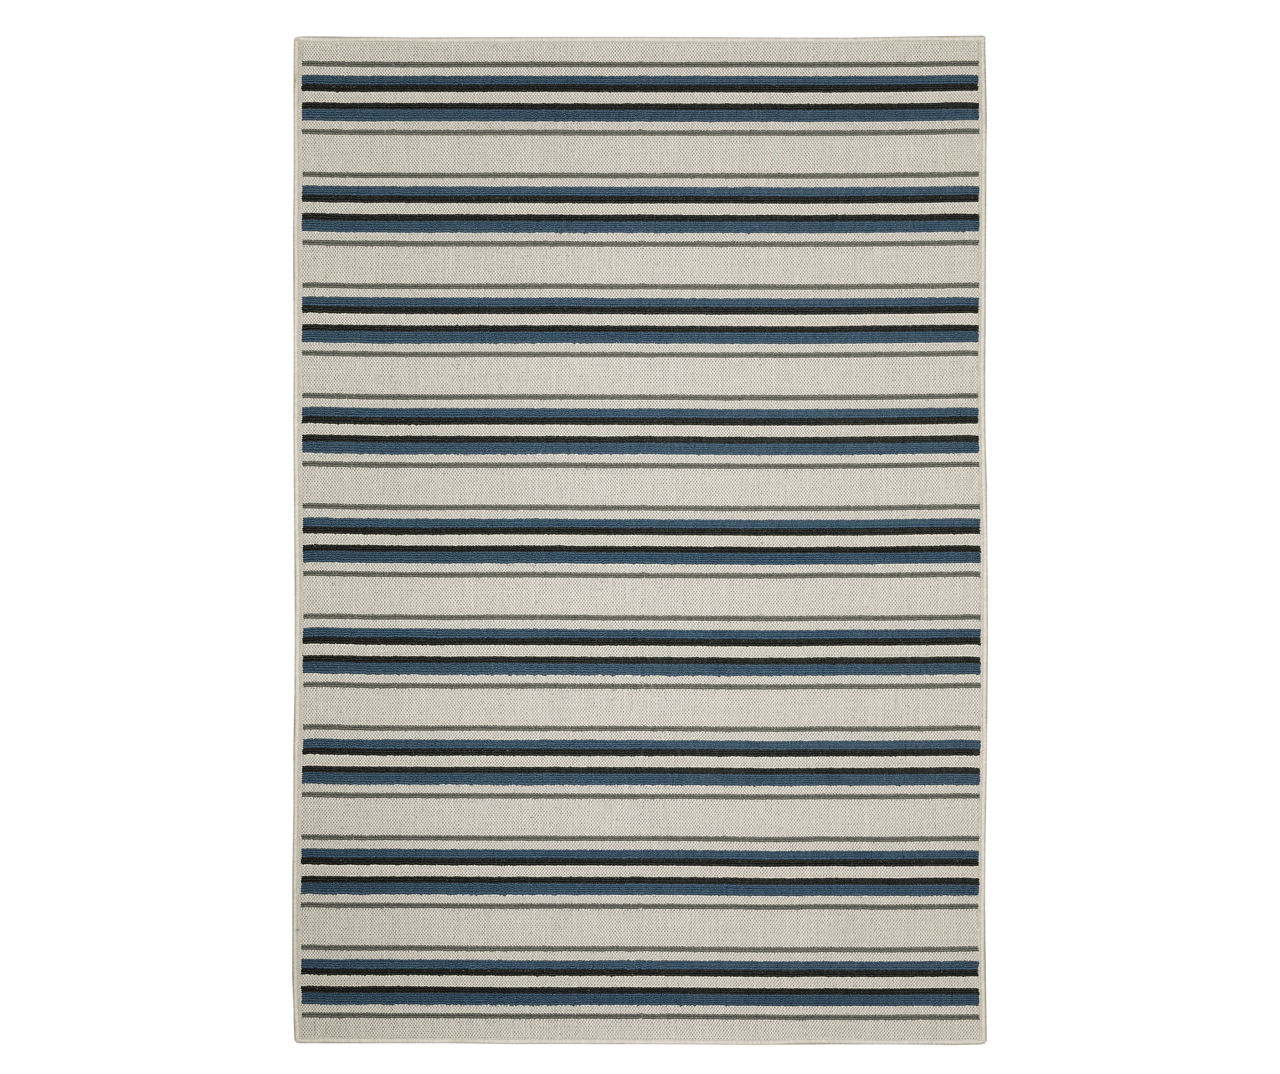 Torie Beige & Blue Stripe Outdoor Area Rug, (1.1' x 3.9')